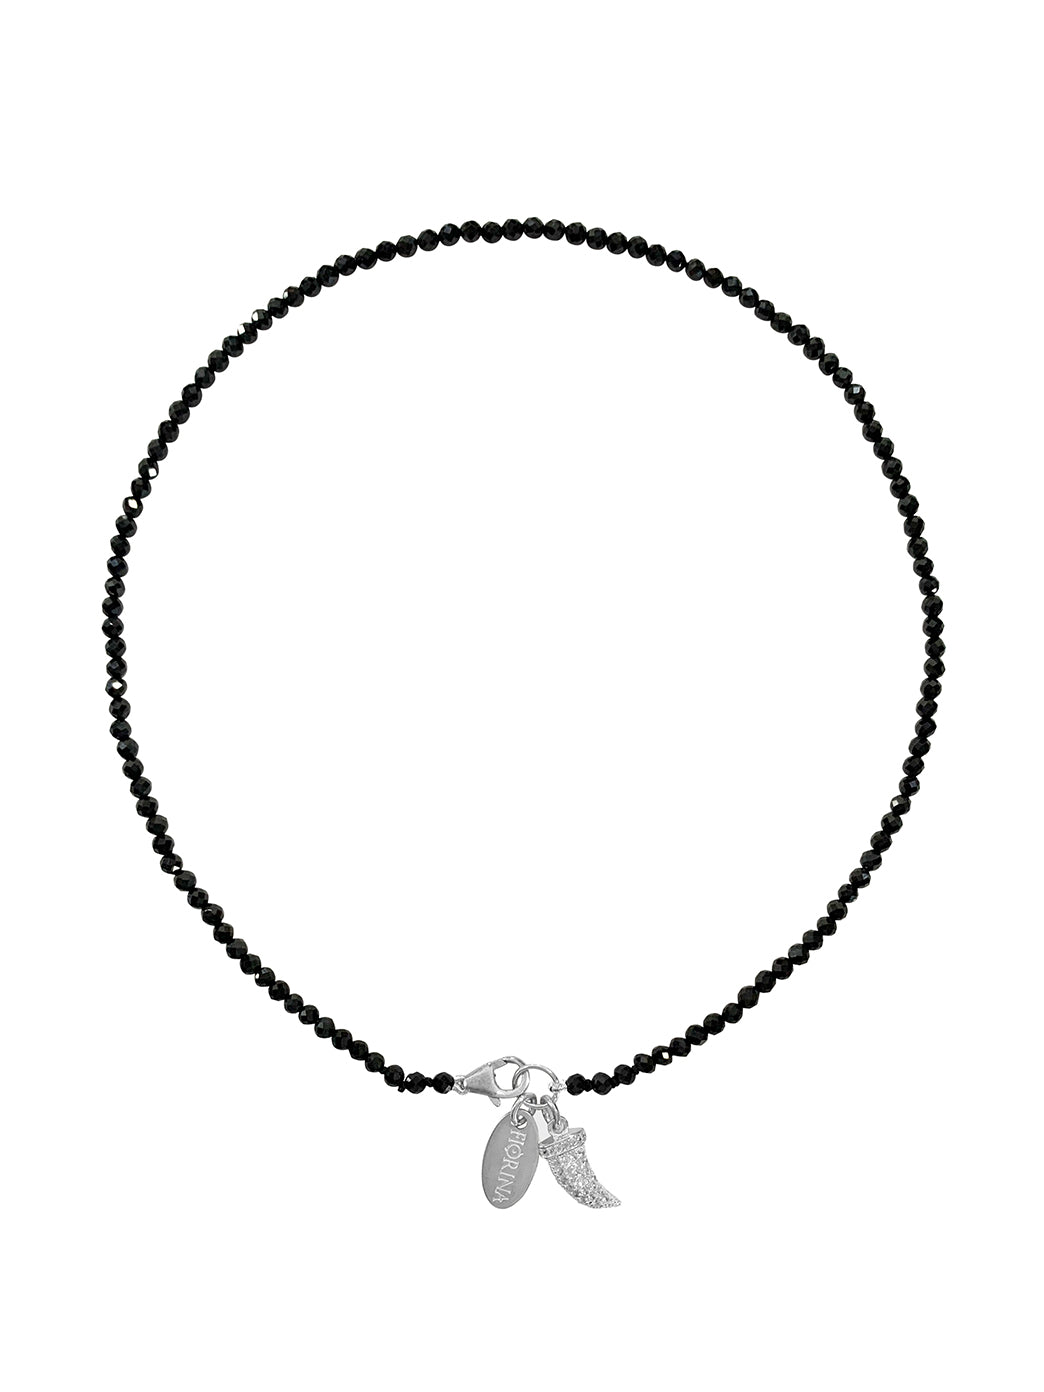 Fiorina Jewellery I Am Necklace Black Onyx